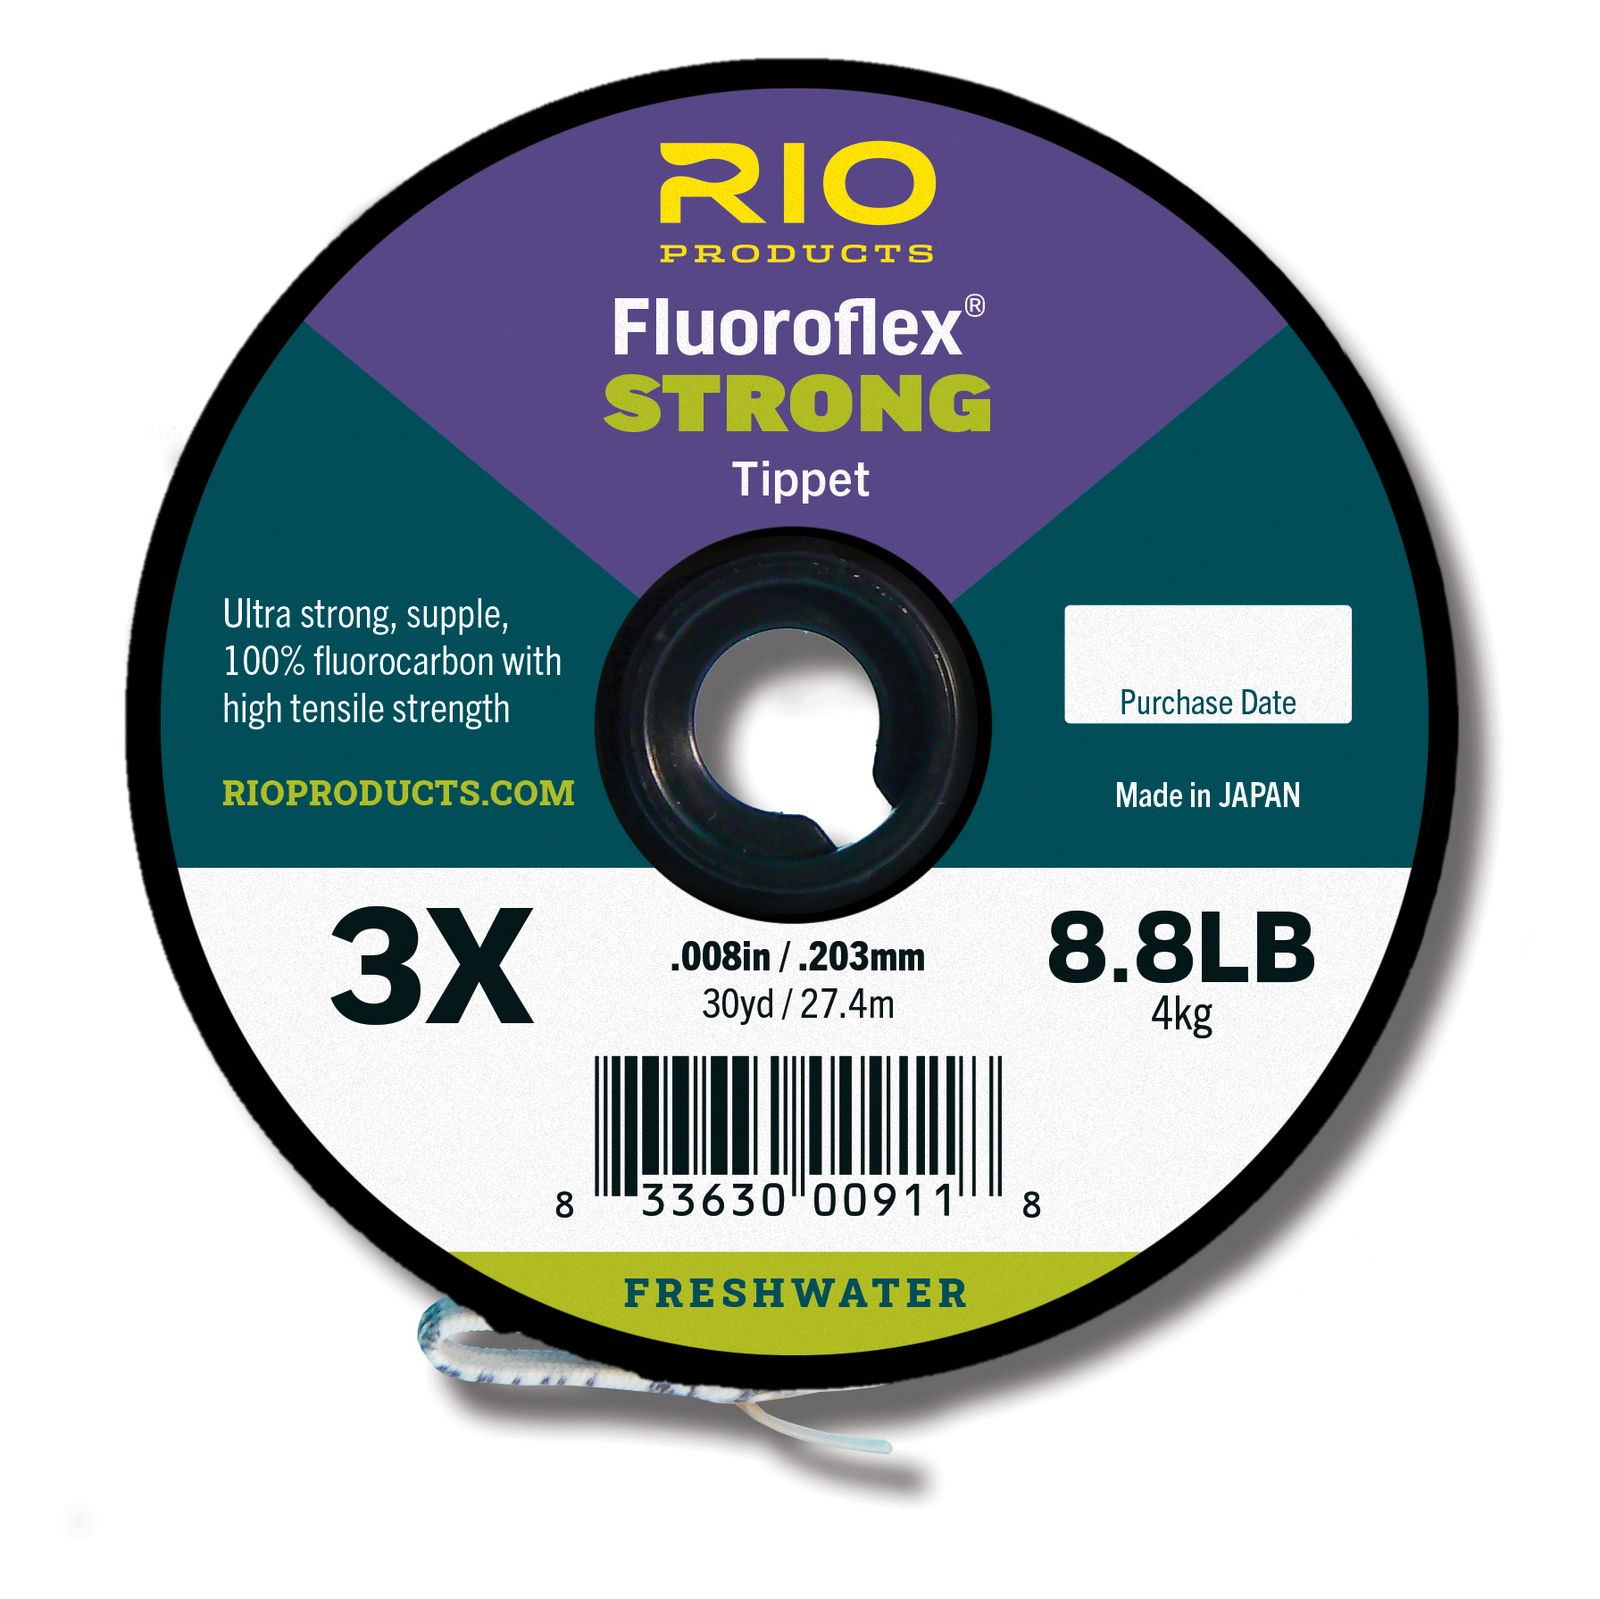 Rio Freshwater Fluoroflex Strong Tippet · 2x · 90 ft